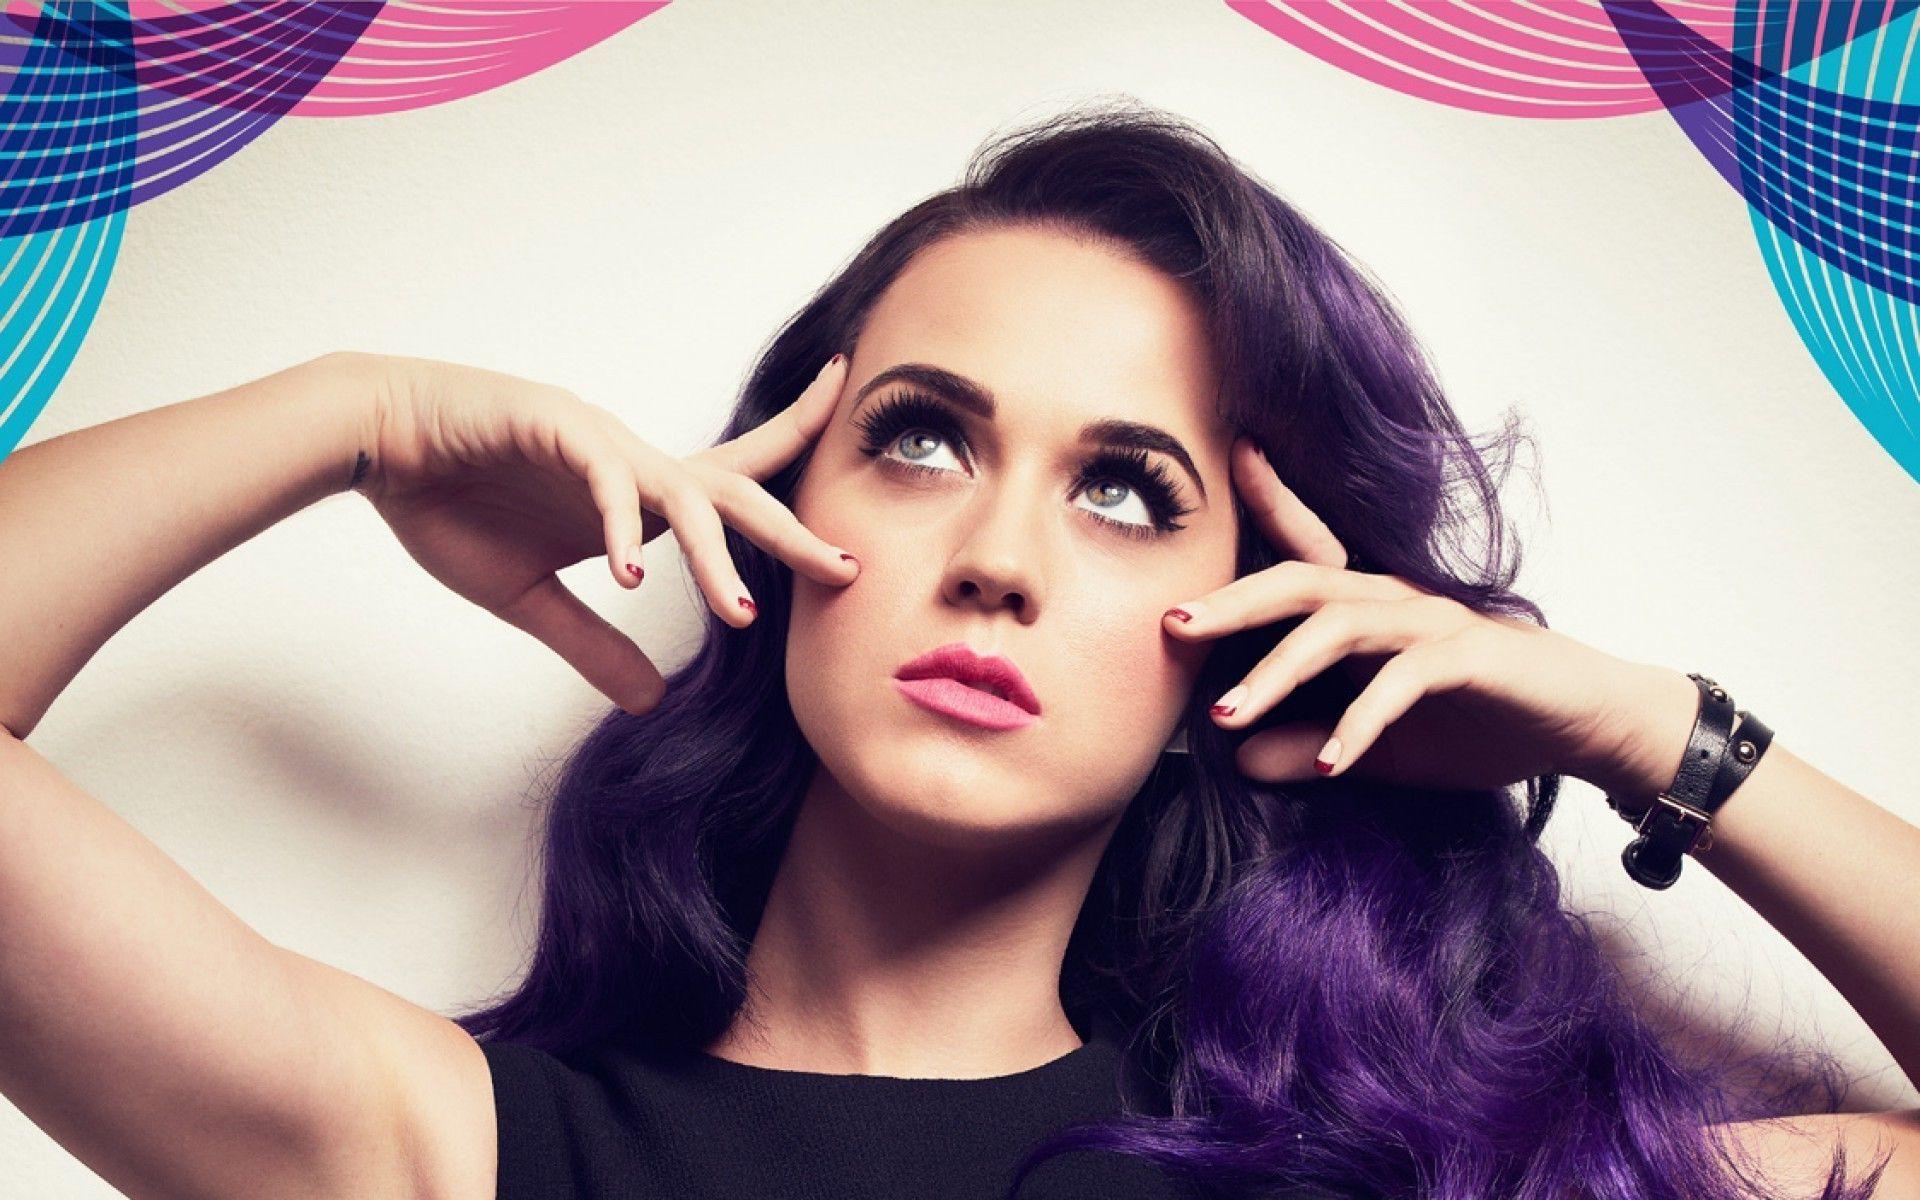 Katy Perry Wallpaper Download Free For Desktop. Best HD Wallpaper